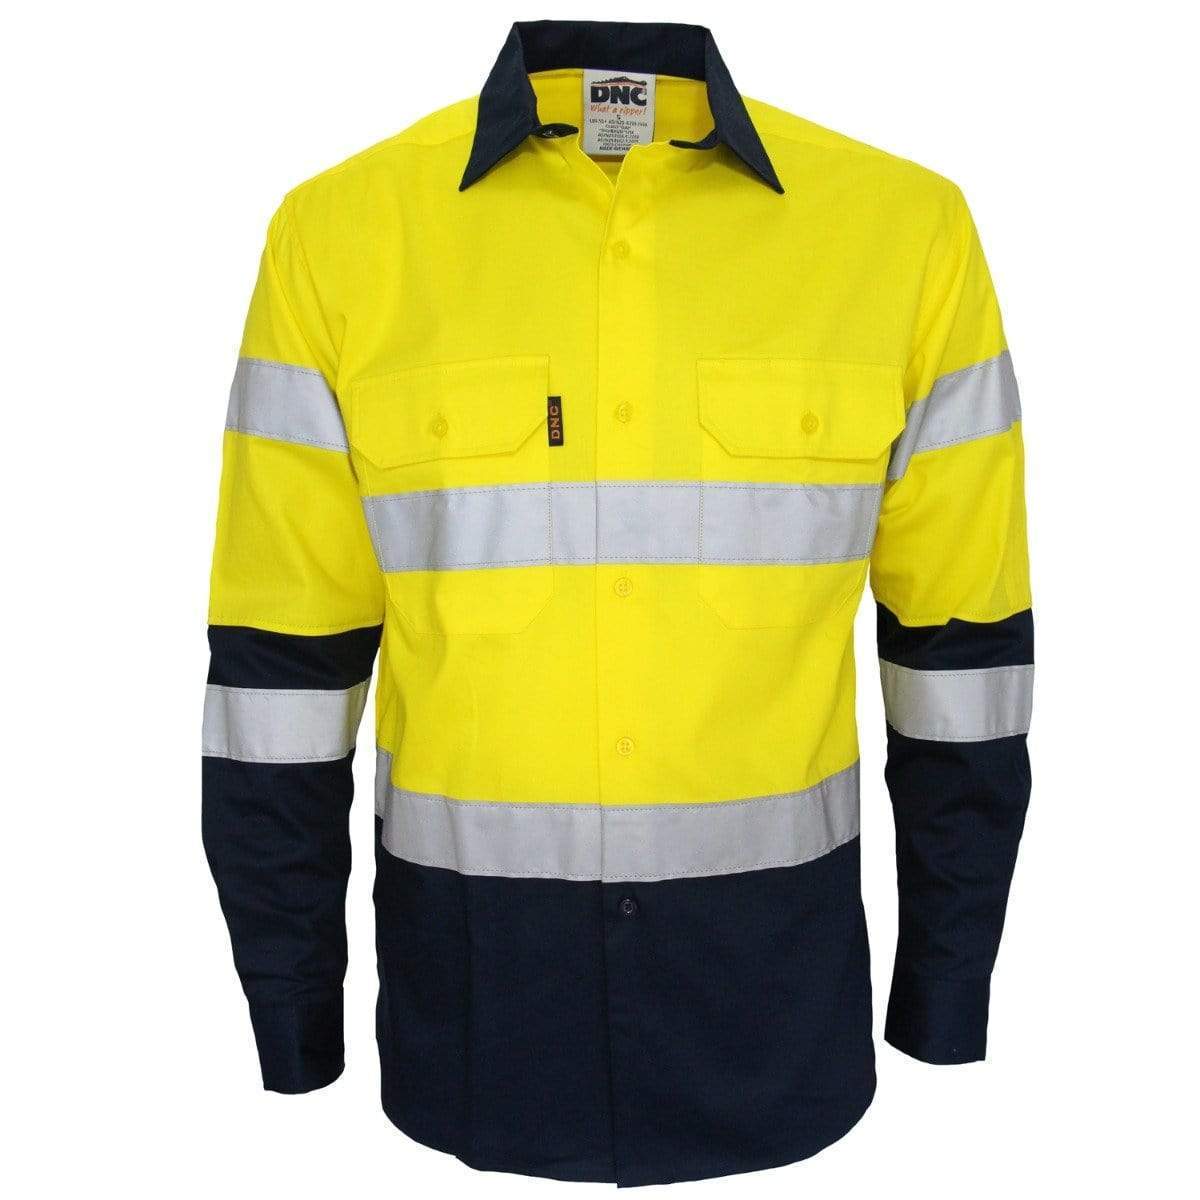 Dnc Workwear Hi-vis 2-tone Bio-motion Taped Shirt - 3976 Work Wear DNC Workwear Yellow/Navy XS 